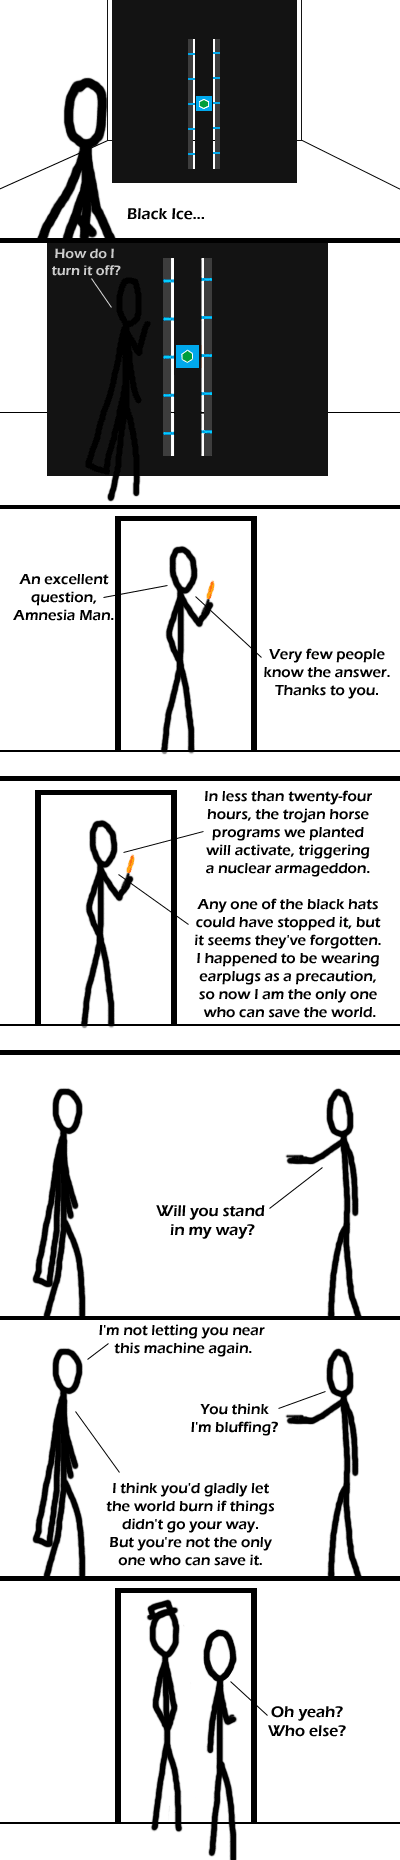 Amnesia Man: Nuclear Armageddon